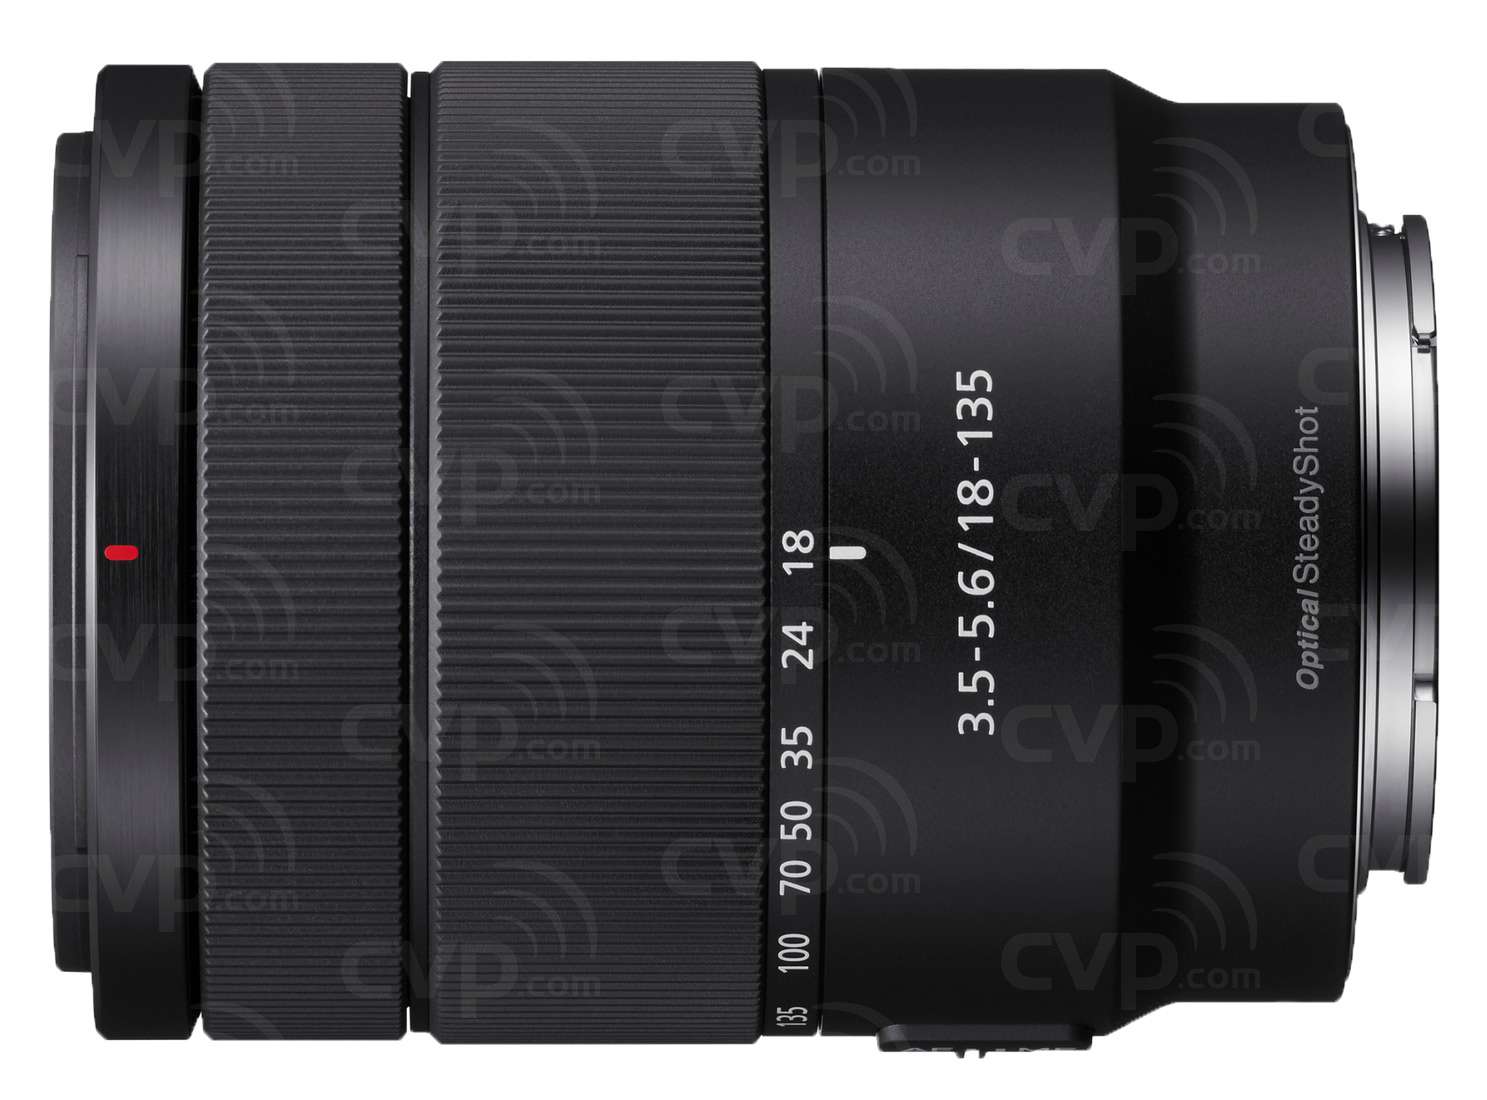 Buy - Sony 18-135mm F3.5-5.6 OSS High Magnification Zoom Lens - Sony E